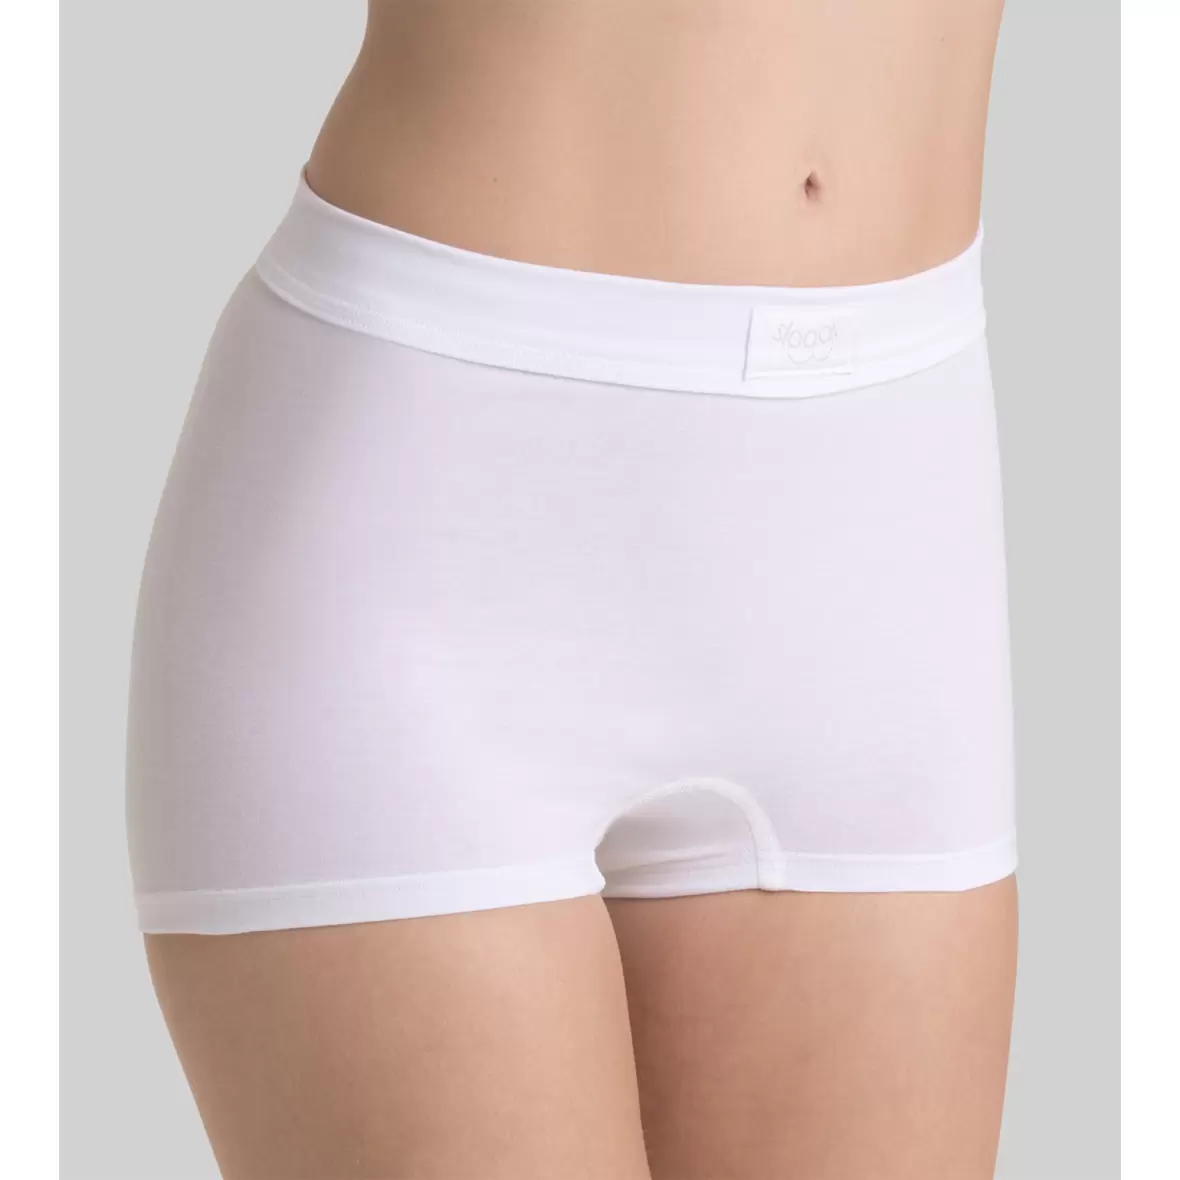 Sofie Lingeri - Pants - Sloggi - Double Comfort Shorts, White